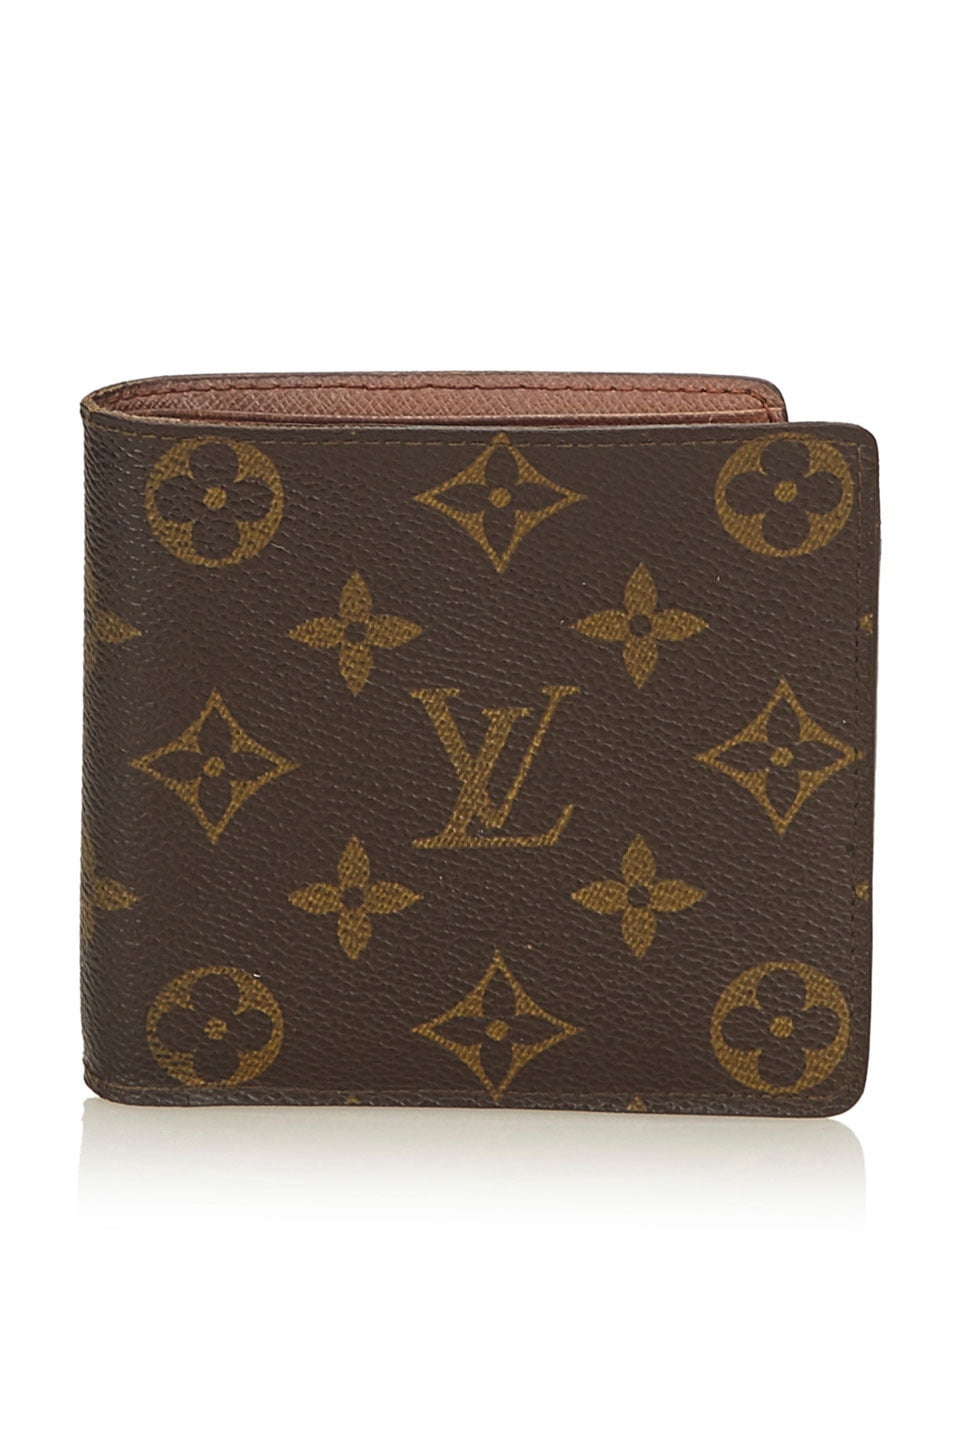 Louis Vuitton Monogram Porte Papier Vintage Wallet  Labellov  Buy and  Sell Authentic Luxury